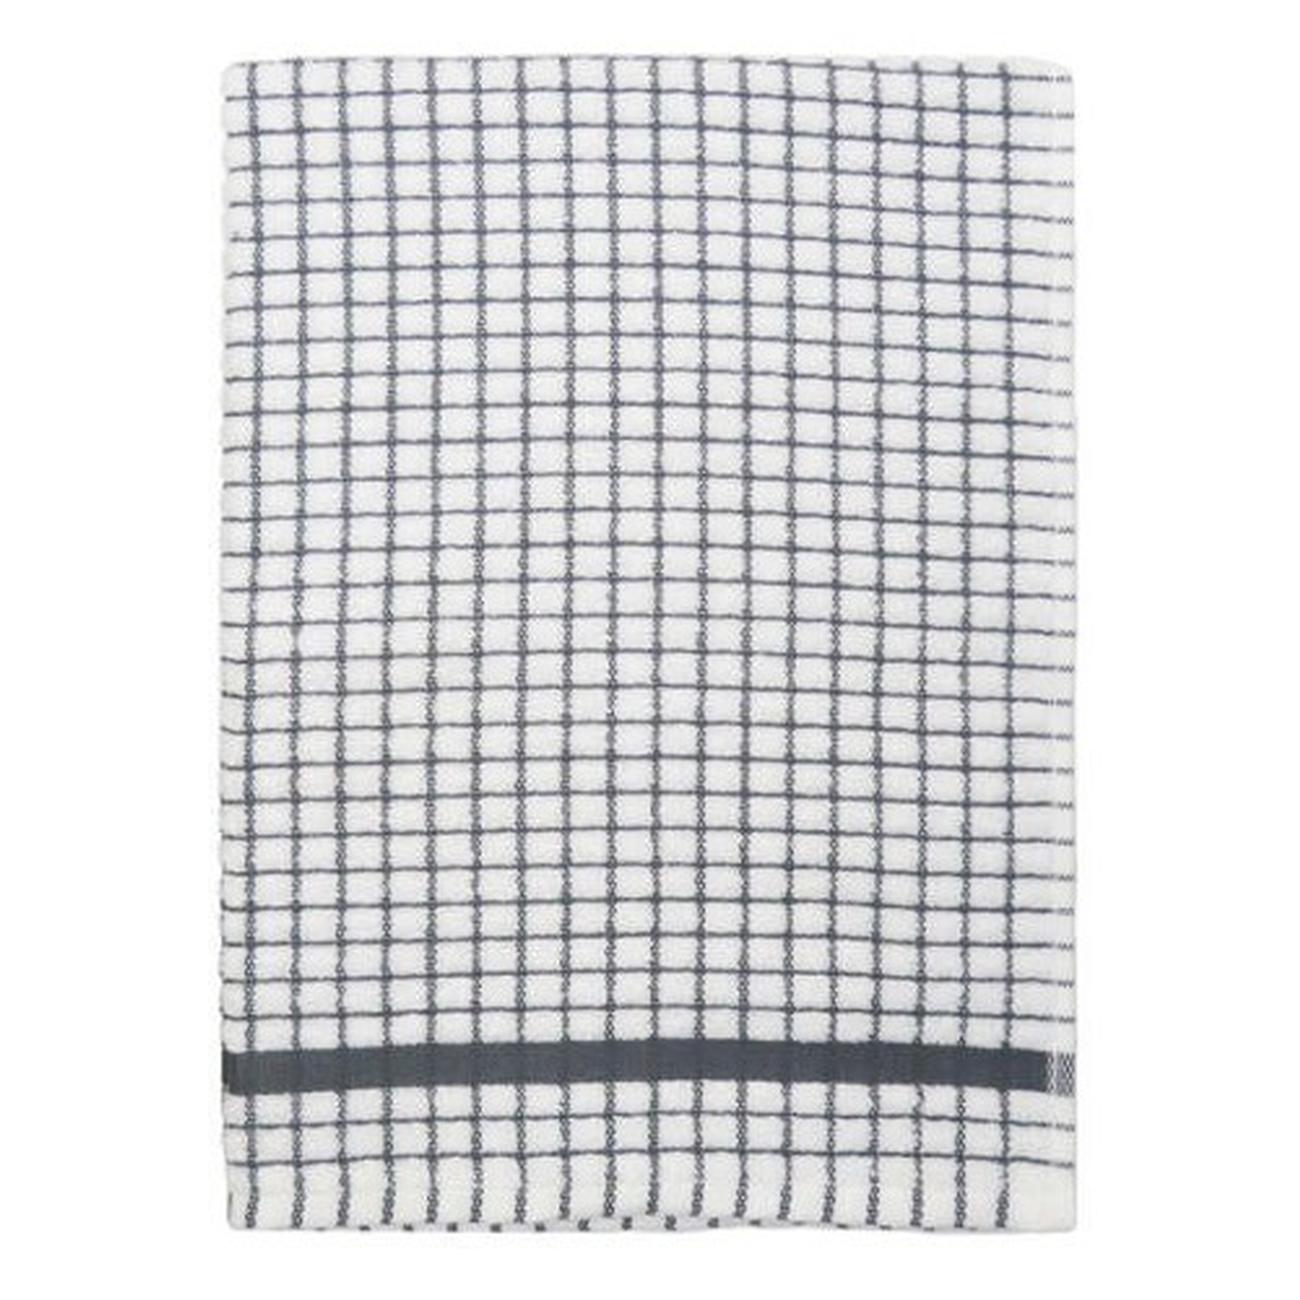 samuel-lamont-poli-dry-tea-towel-grey - Samuel Lamont Poli Dri Tea Towel Grey